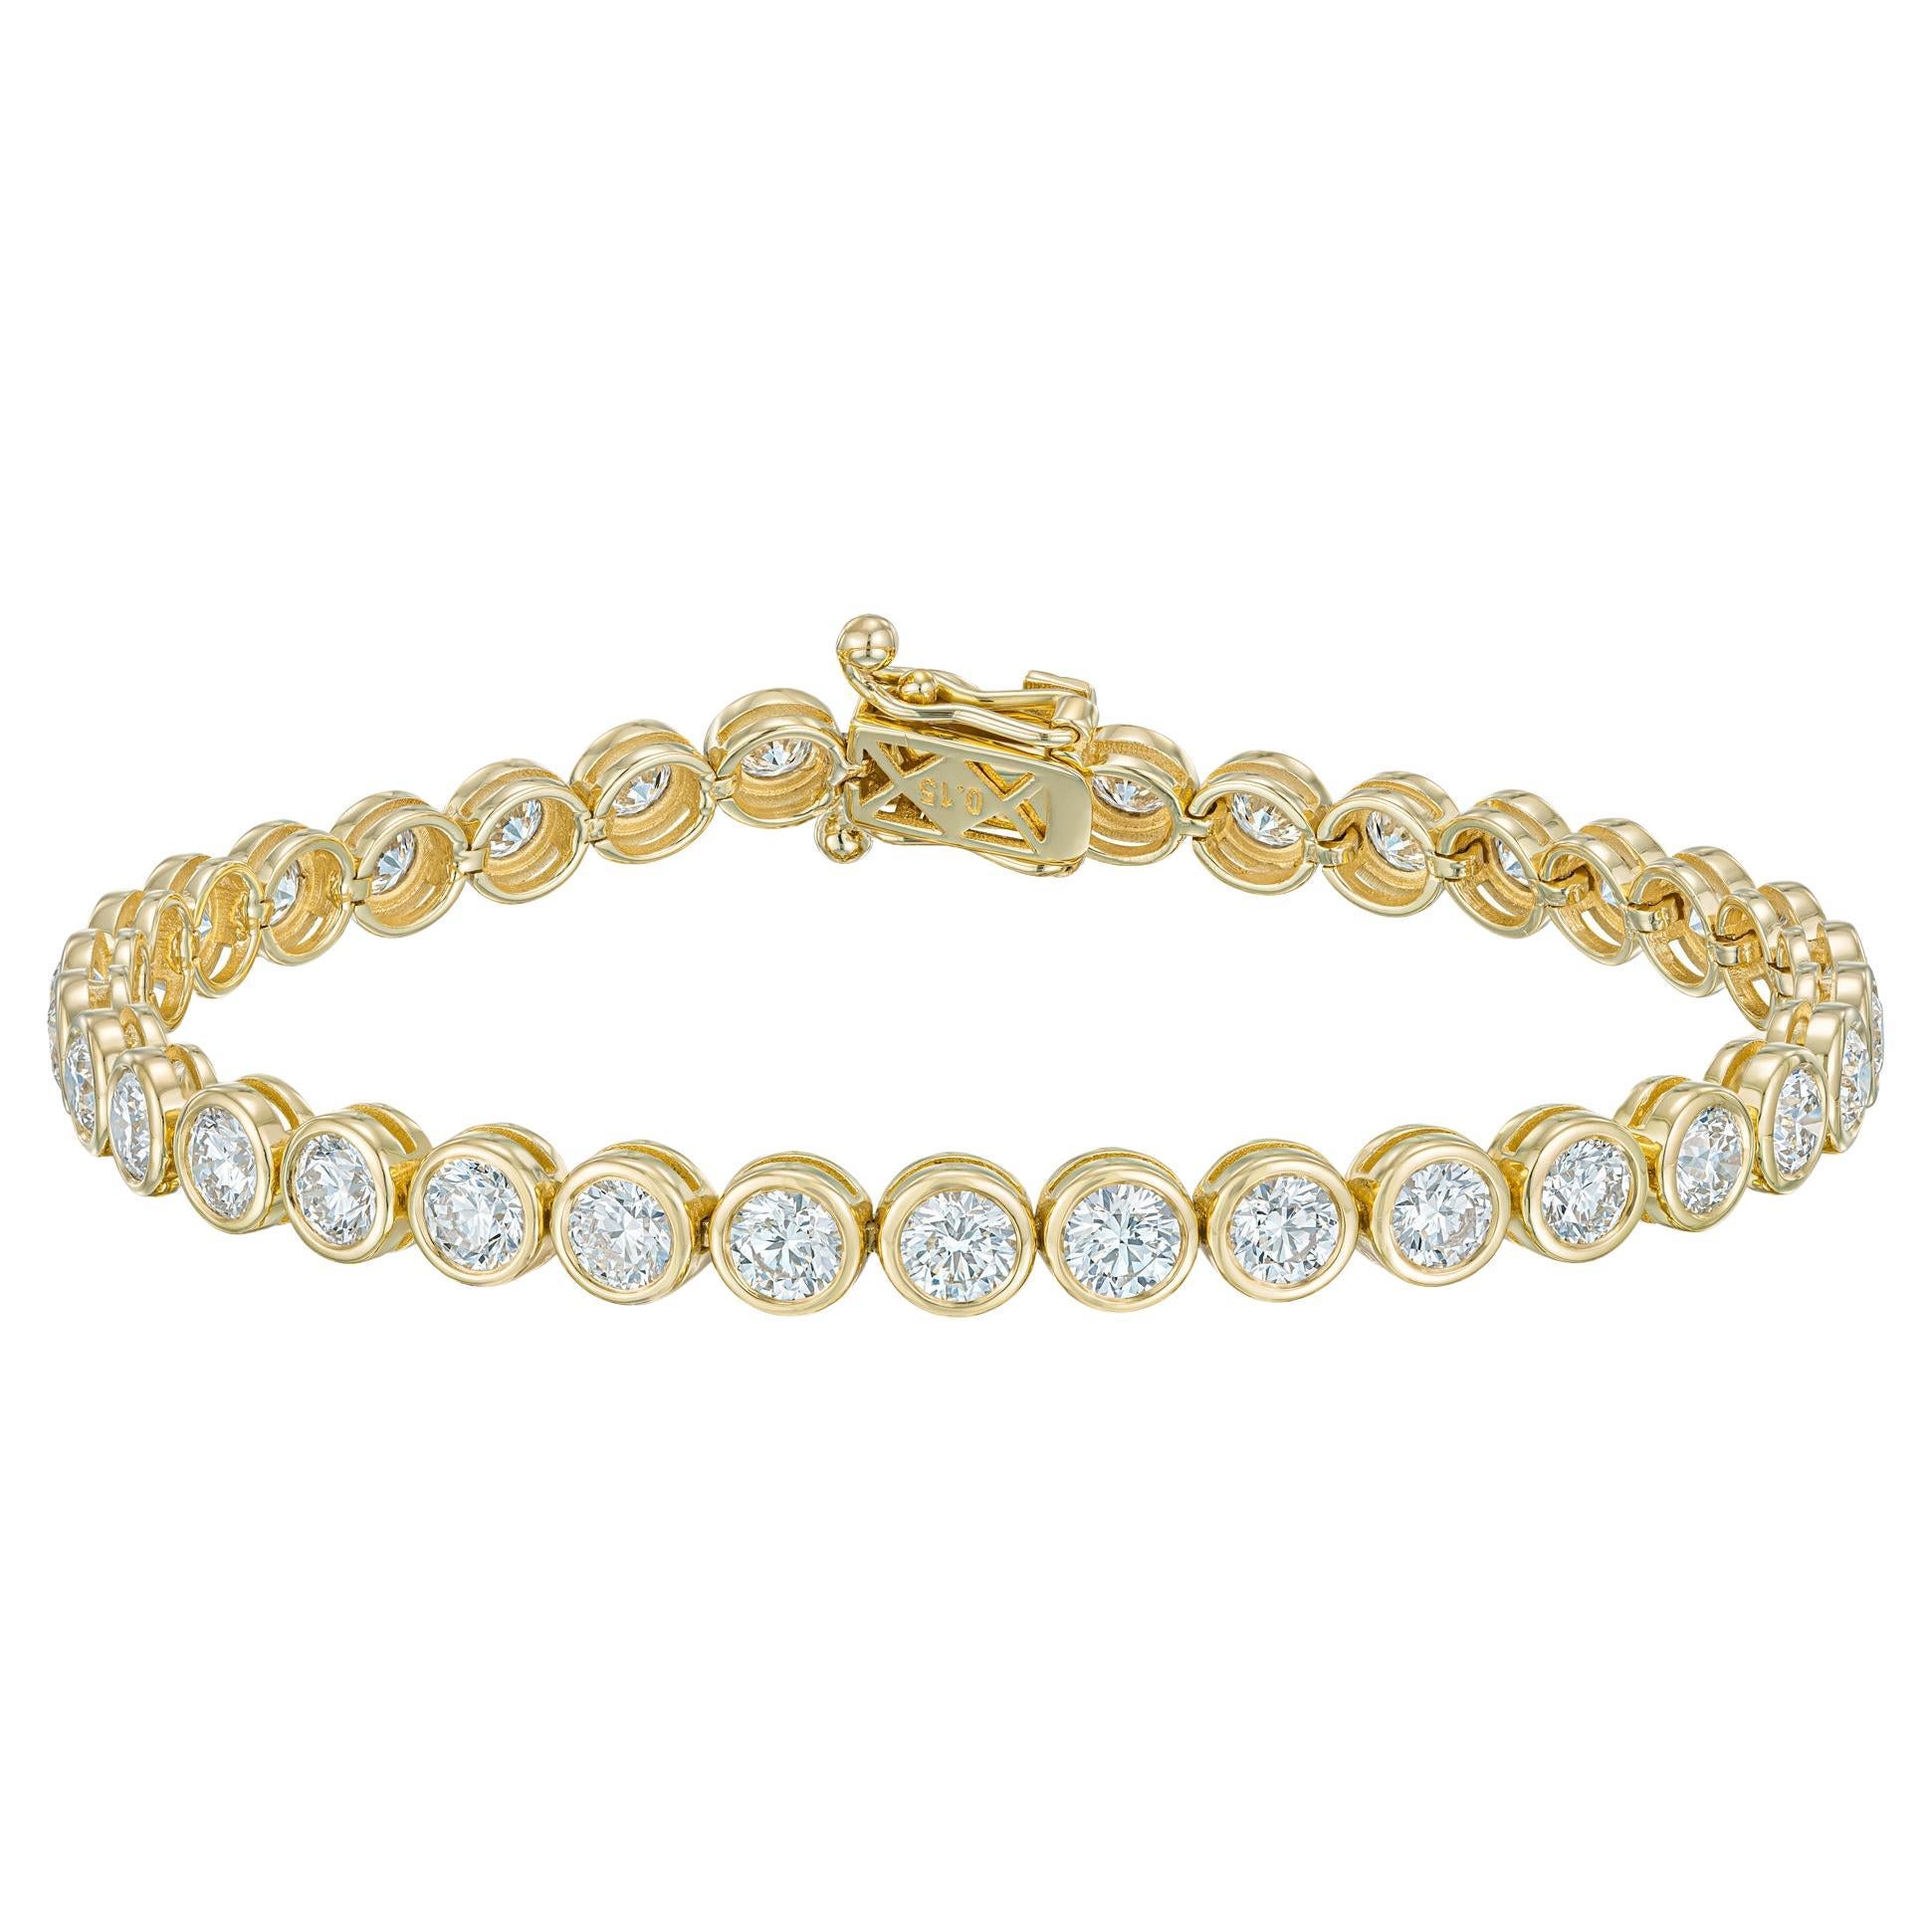 Bracelet tennis en or jaune 18 carats serti d'un diamant naturel de 5,40 carats monté en serti clos 